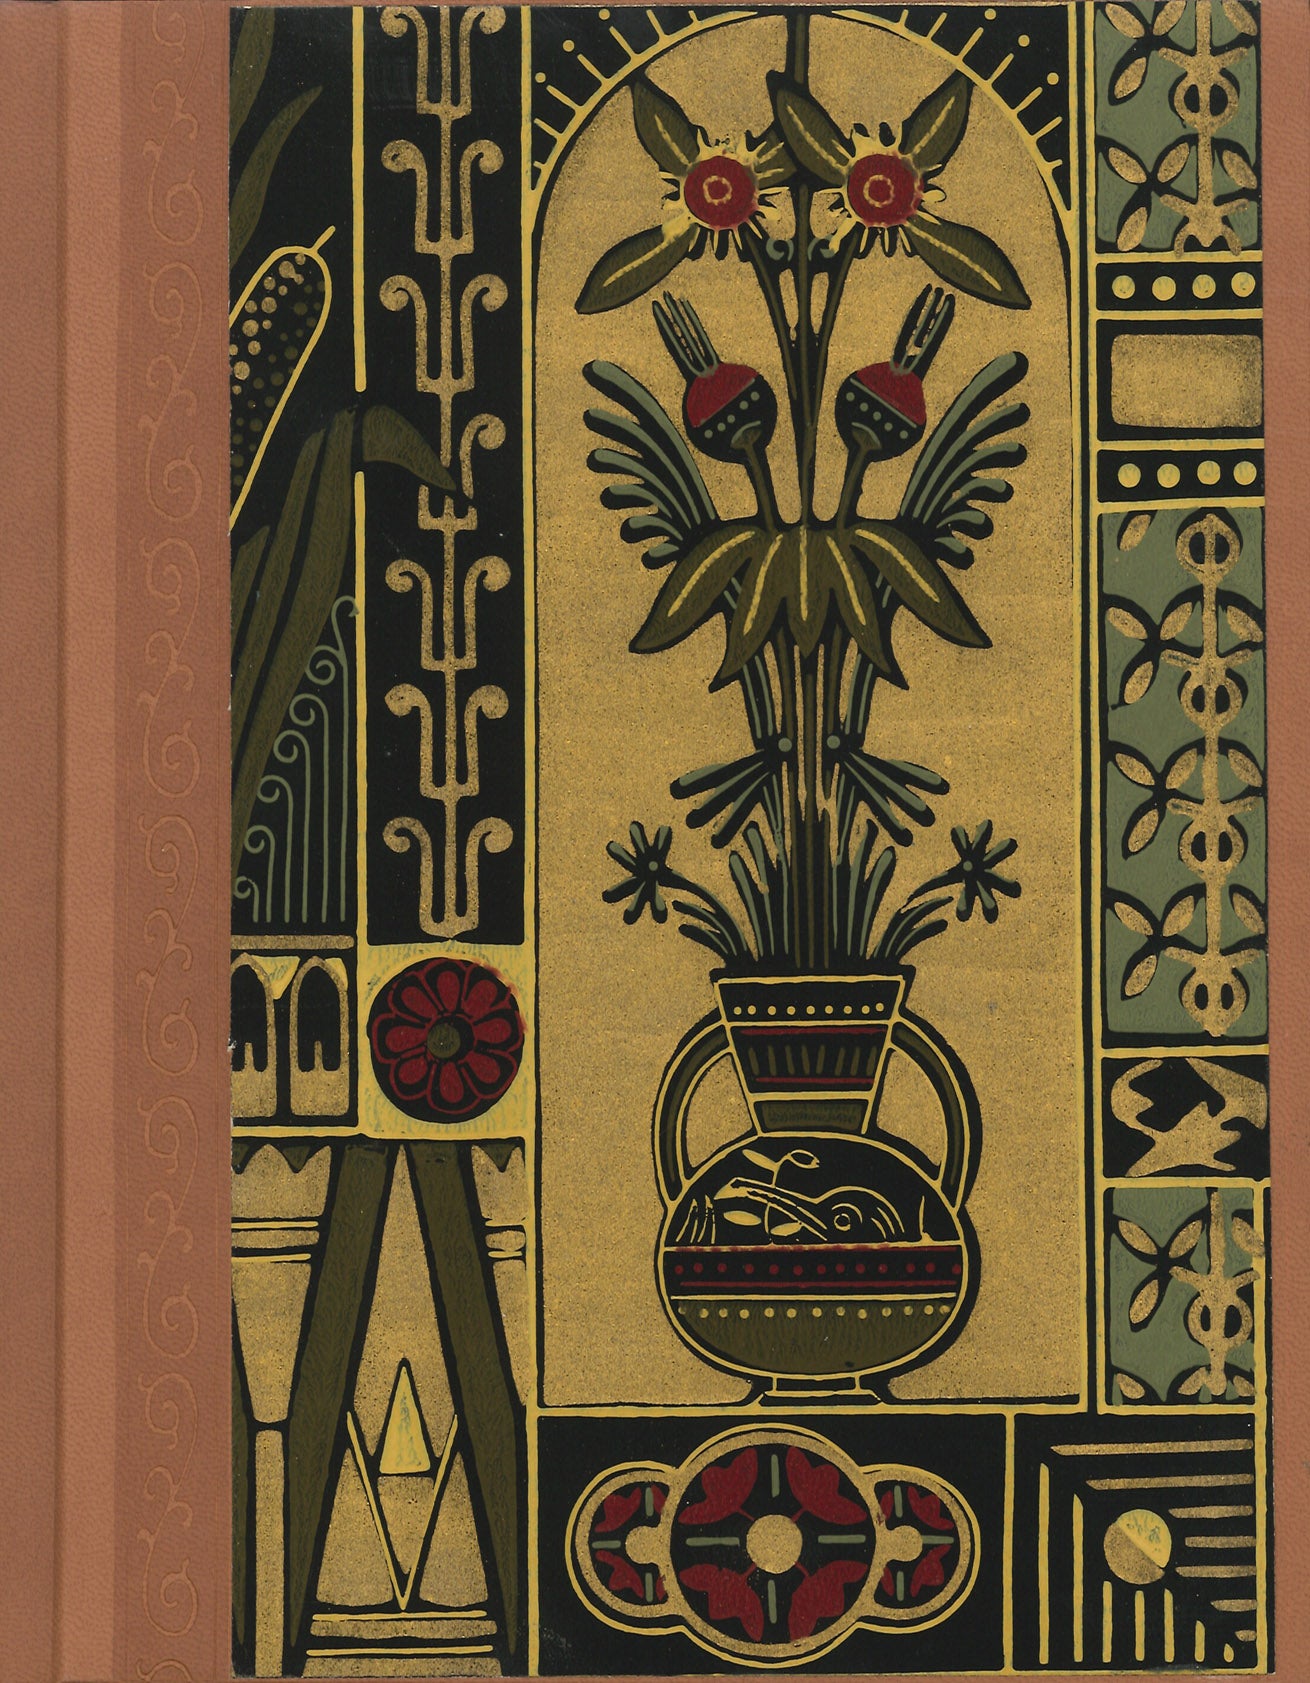 Aesthetic Era Antique Wallpaper Journal - 7" x 9"